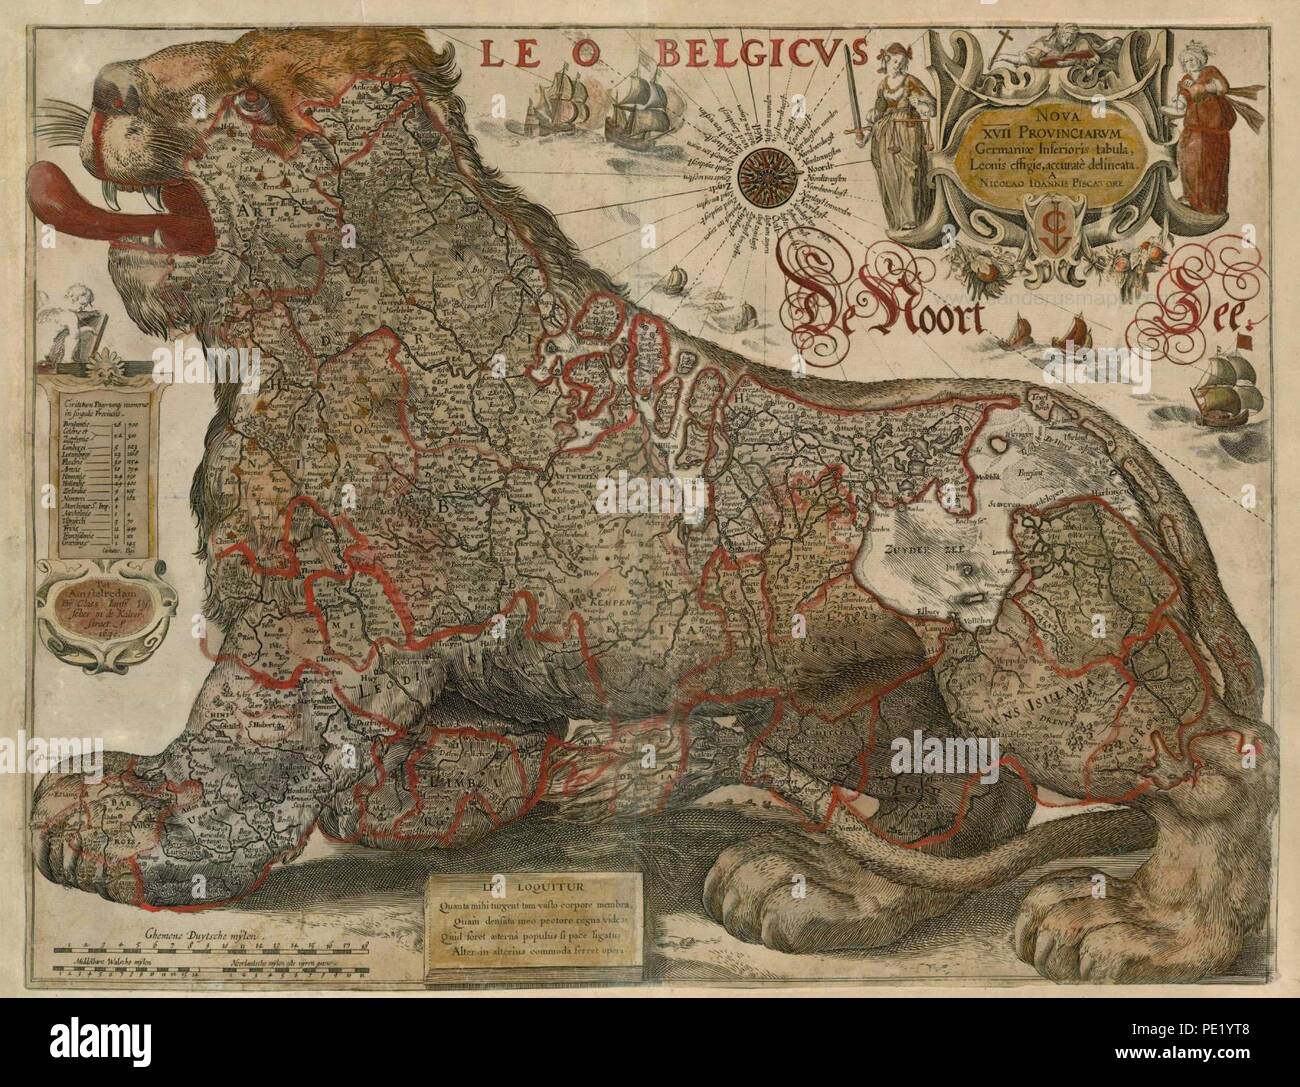 Antique map of Leo Belgicus by Visscher C.J. - Gerritsz 1630. Stock Photo